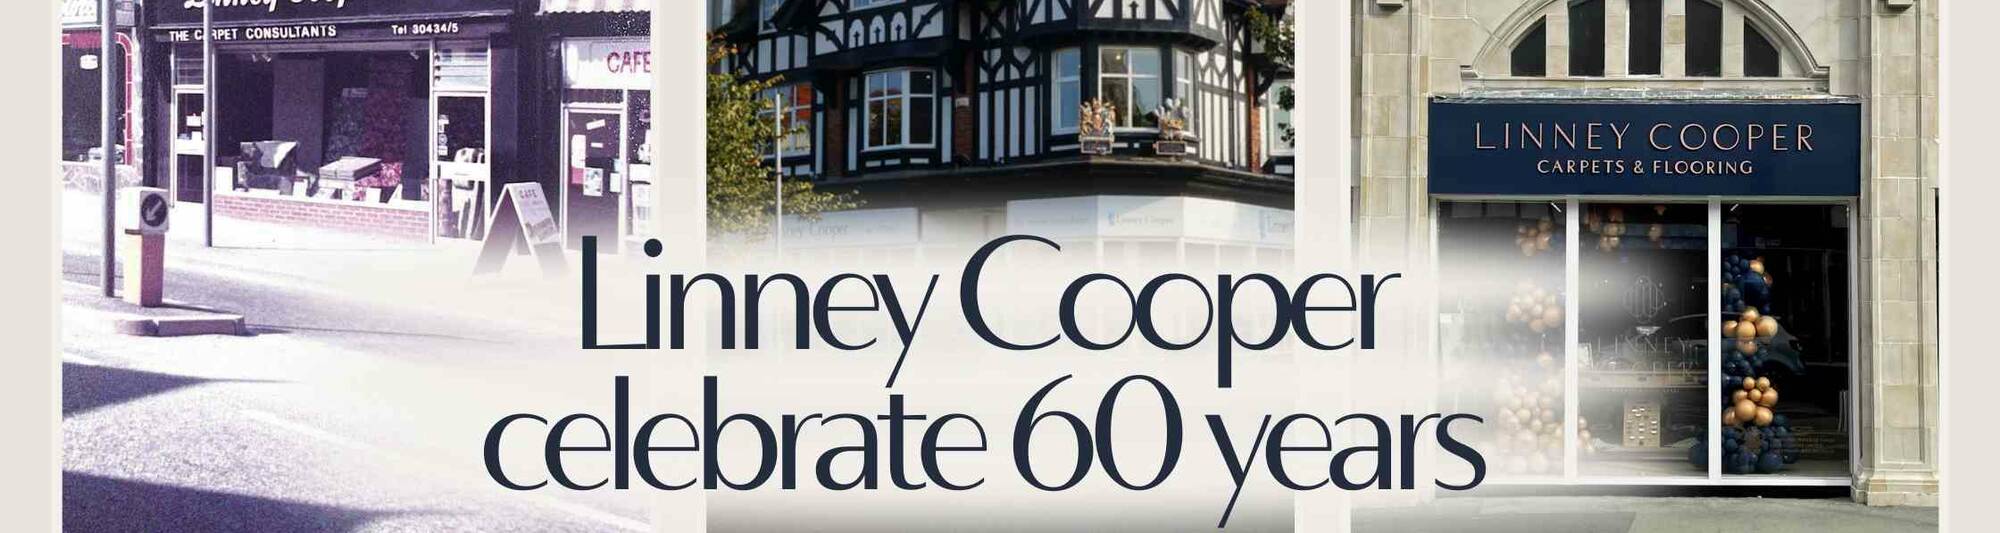 Linney Cooper celebrate 60 years